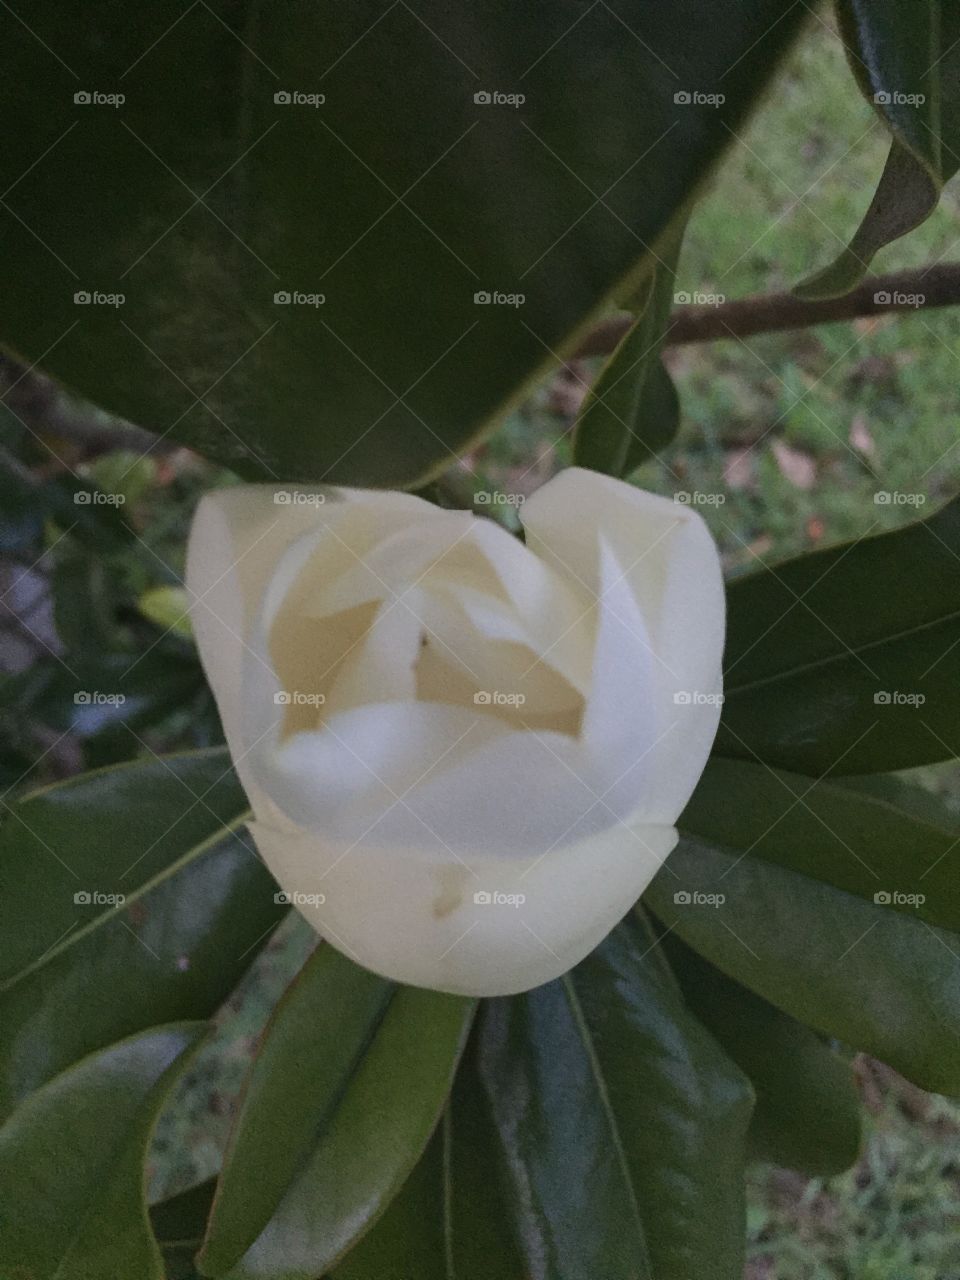 Magnolias are budding